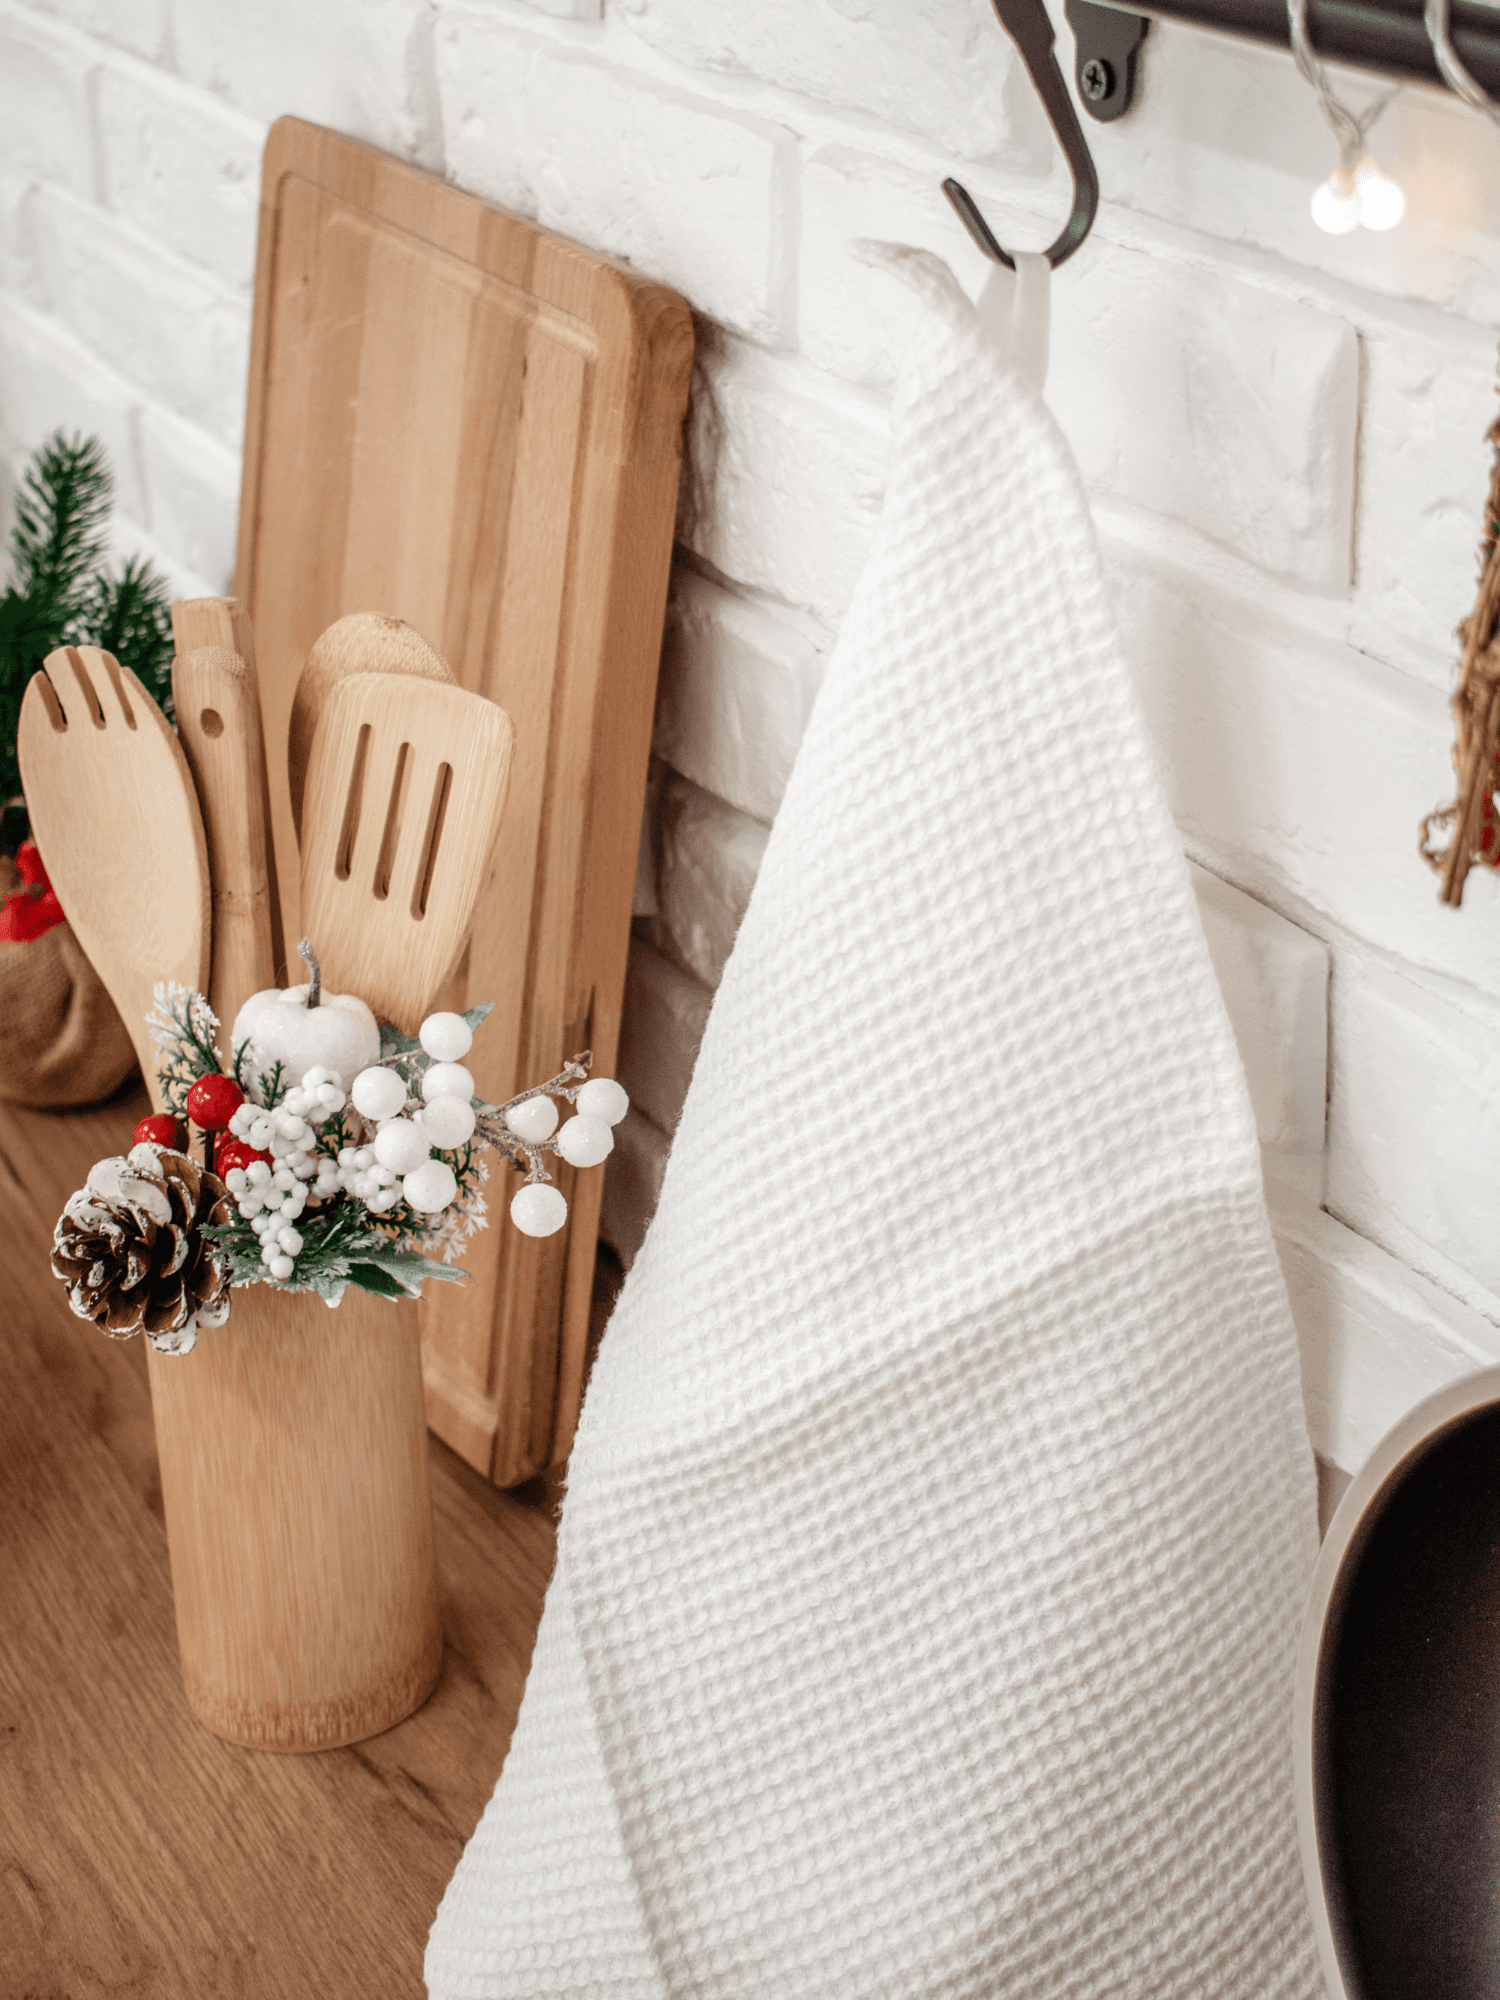 Snow white linen waffle towel - Towel - FlaxLin Eco Textiles